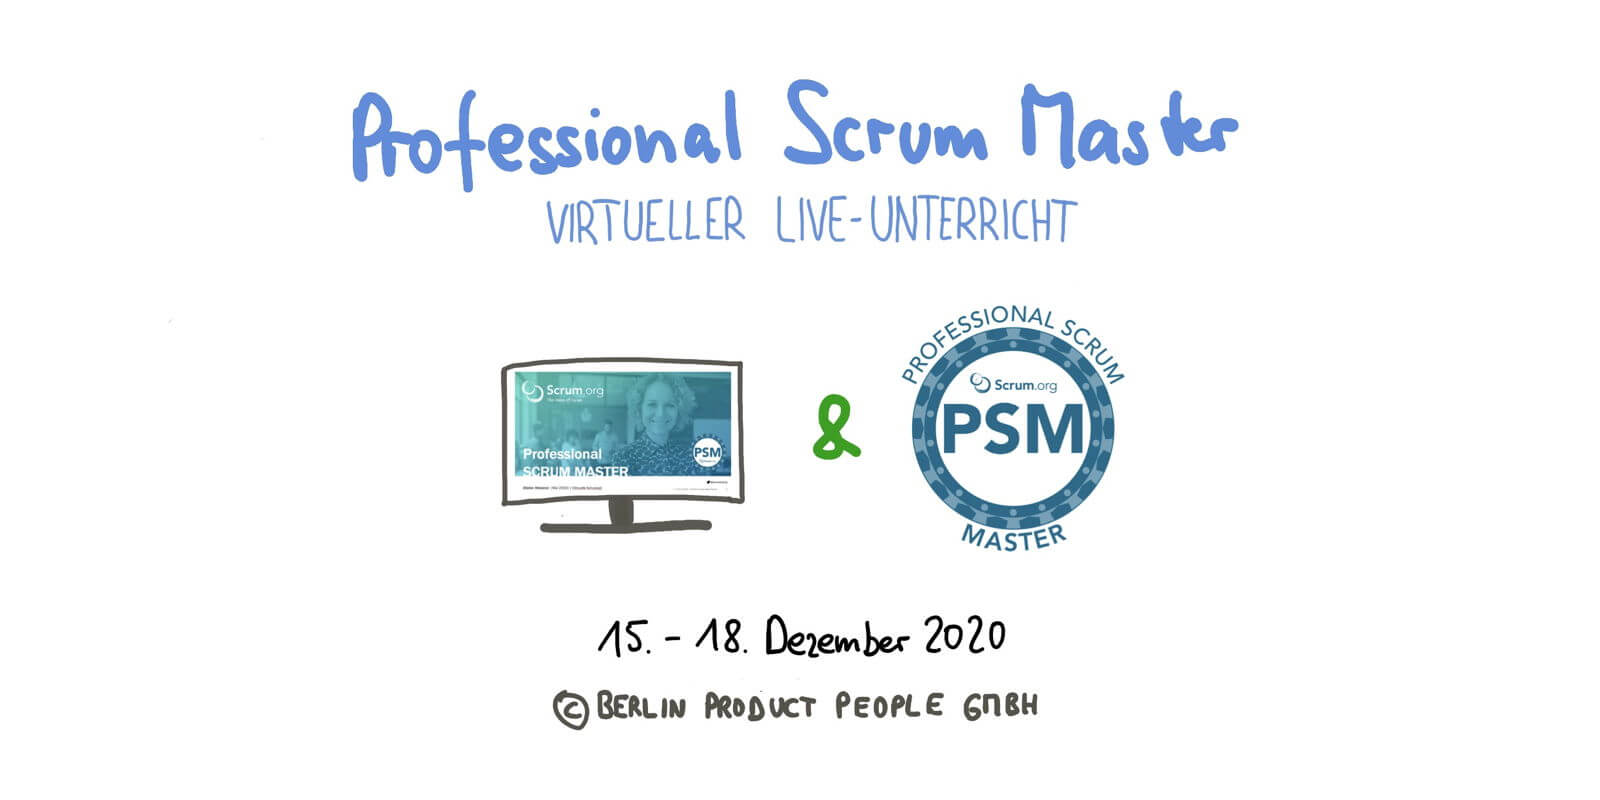 Professional Scrum Master Online-Training PSM I Zertifikat — 15. bis 18. Dezember 2020 — Berlin Product People GmbH